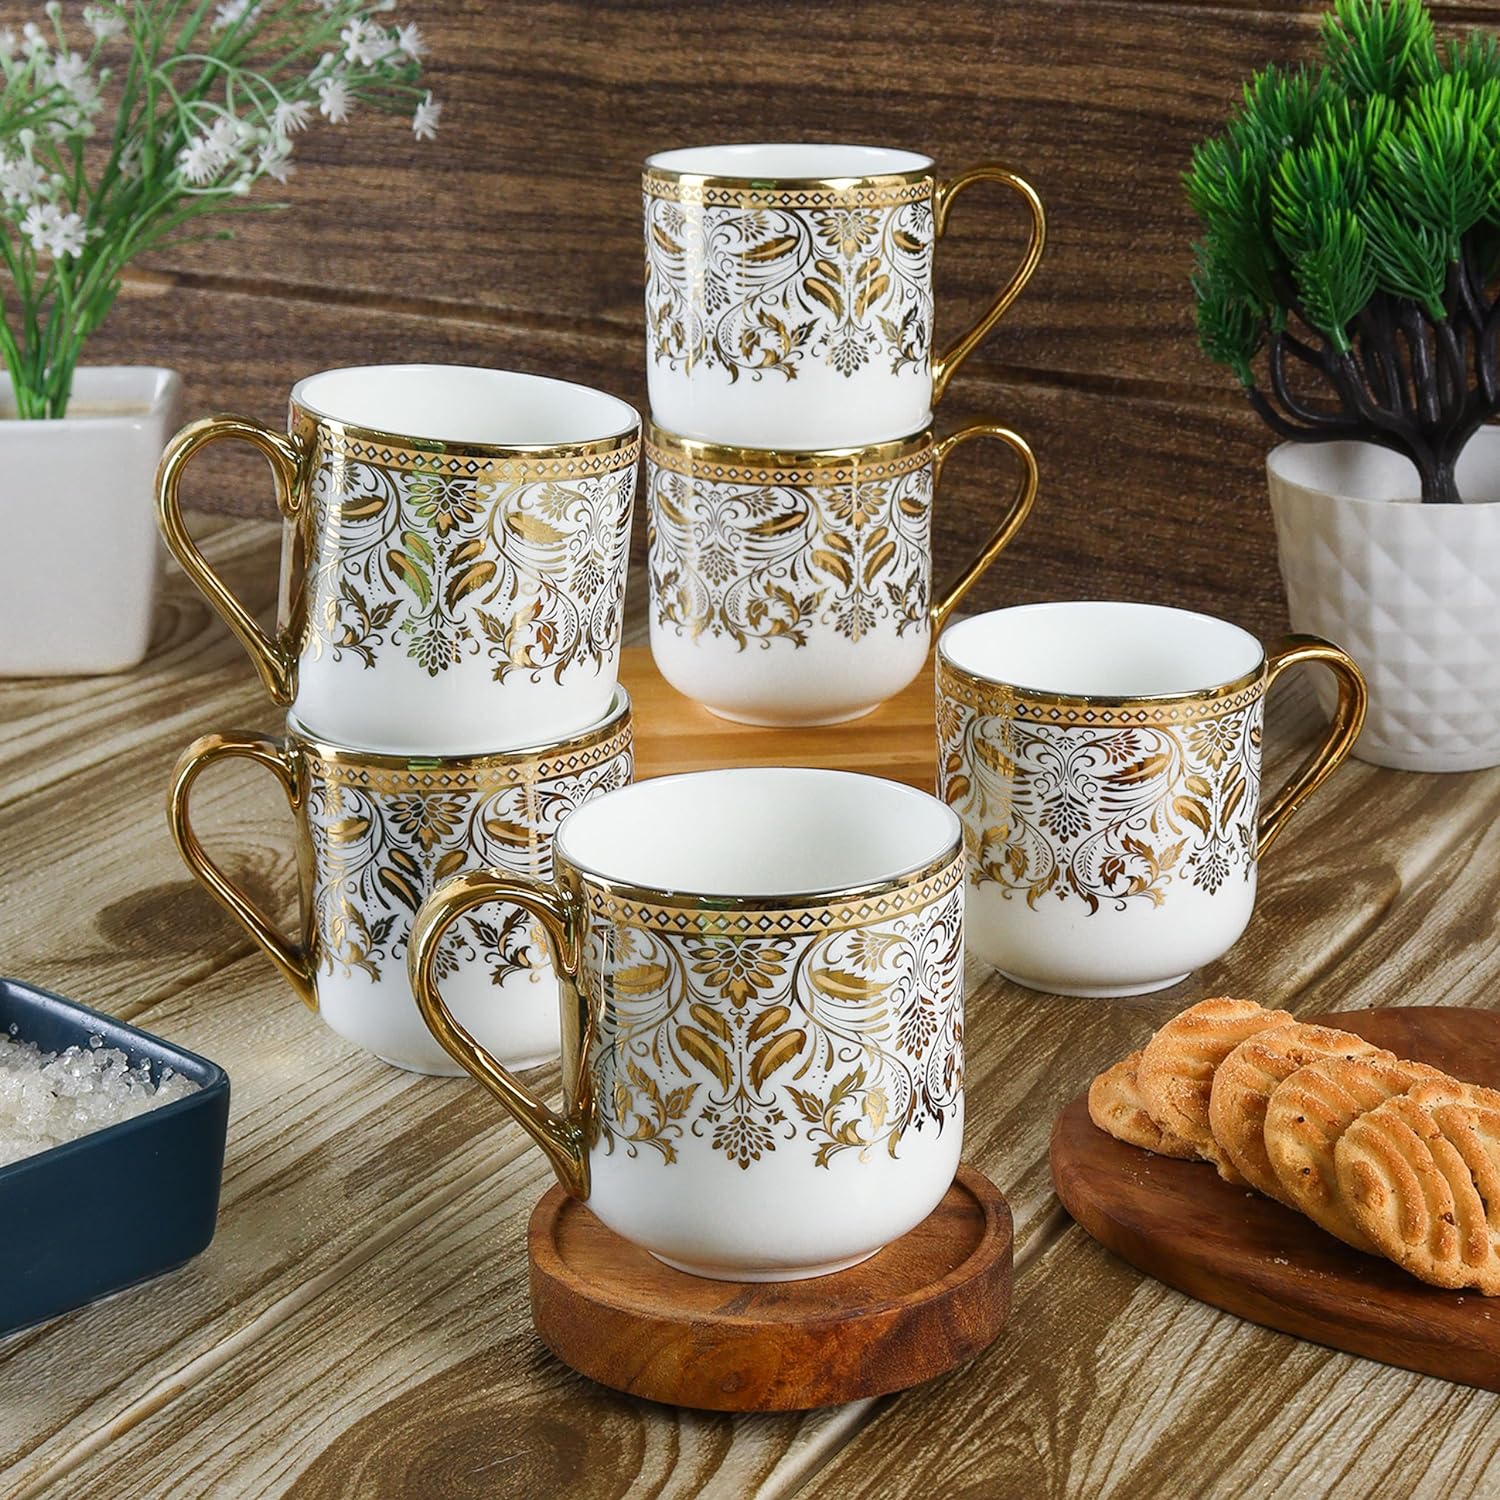 Golden Royal Golden Leaves Tea Mugs, Ceramic Tea Cups, Coffee Mugs (180 ml, Golden) - 6 Pcs Set (NOT Microwave Safe)